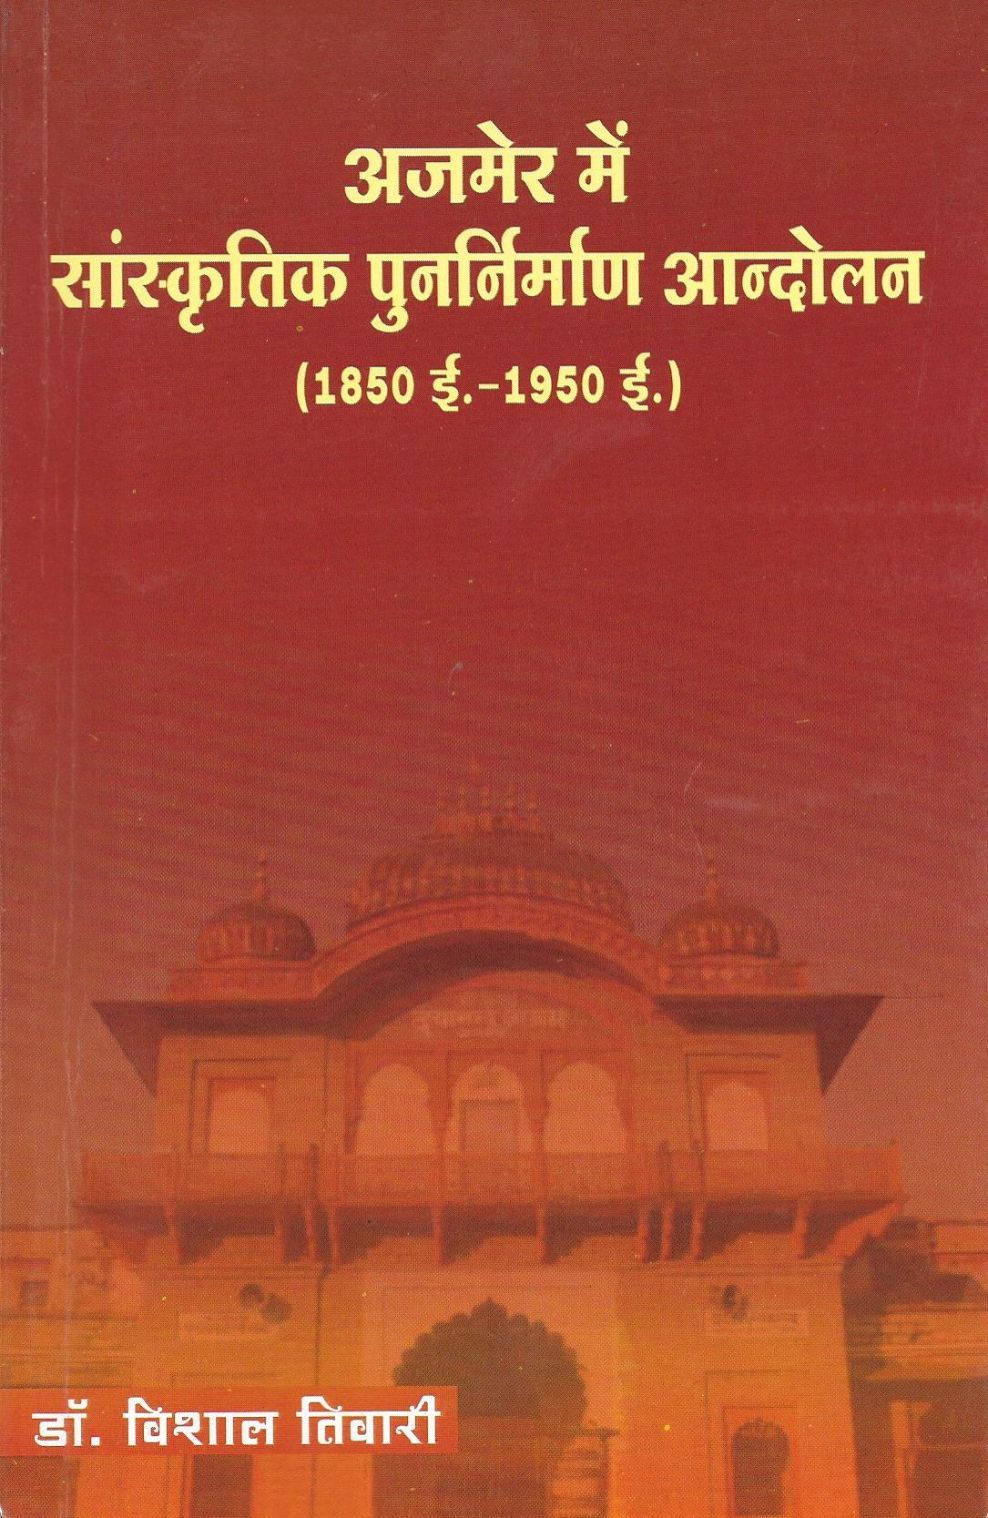 95 List Abhinav Bharat Book from Famous authors